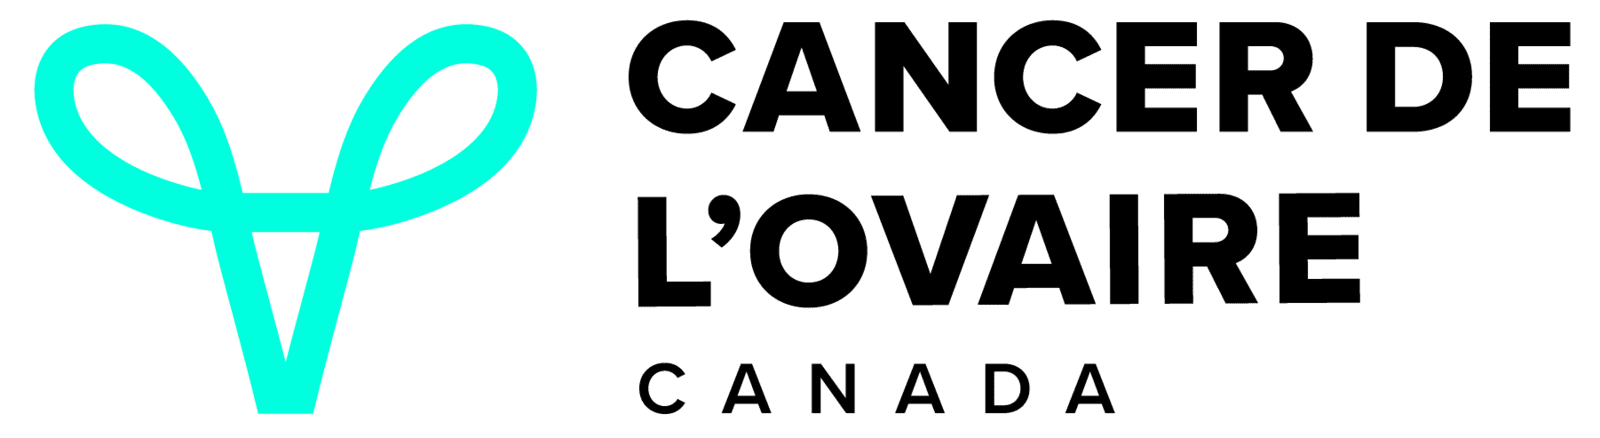 Cancer de l’ovaire Canada